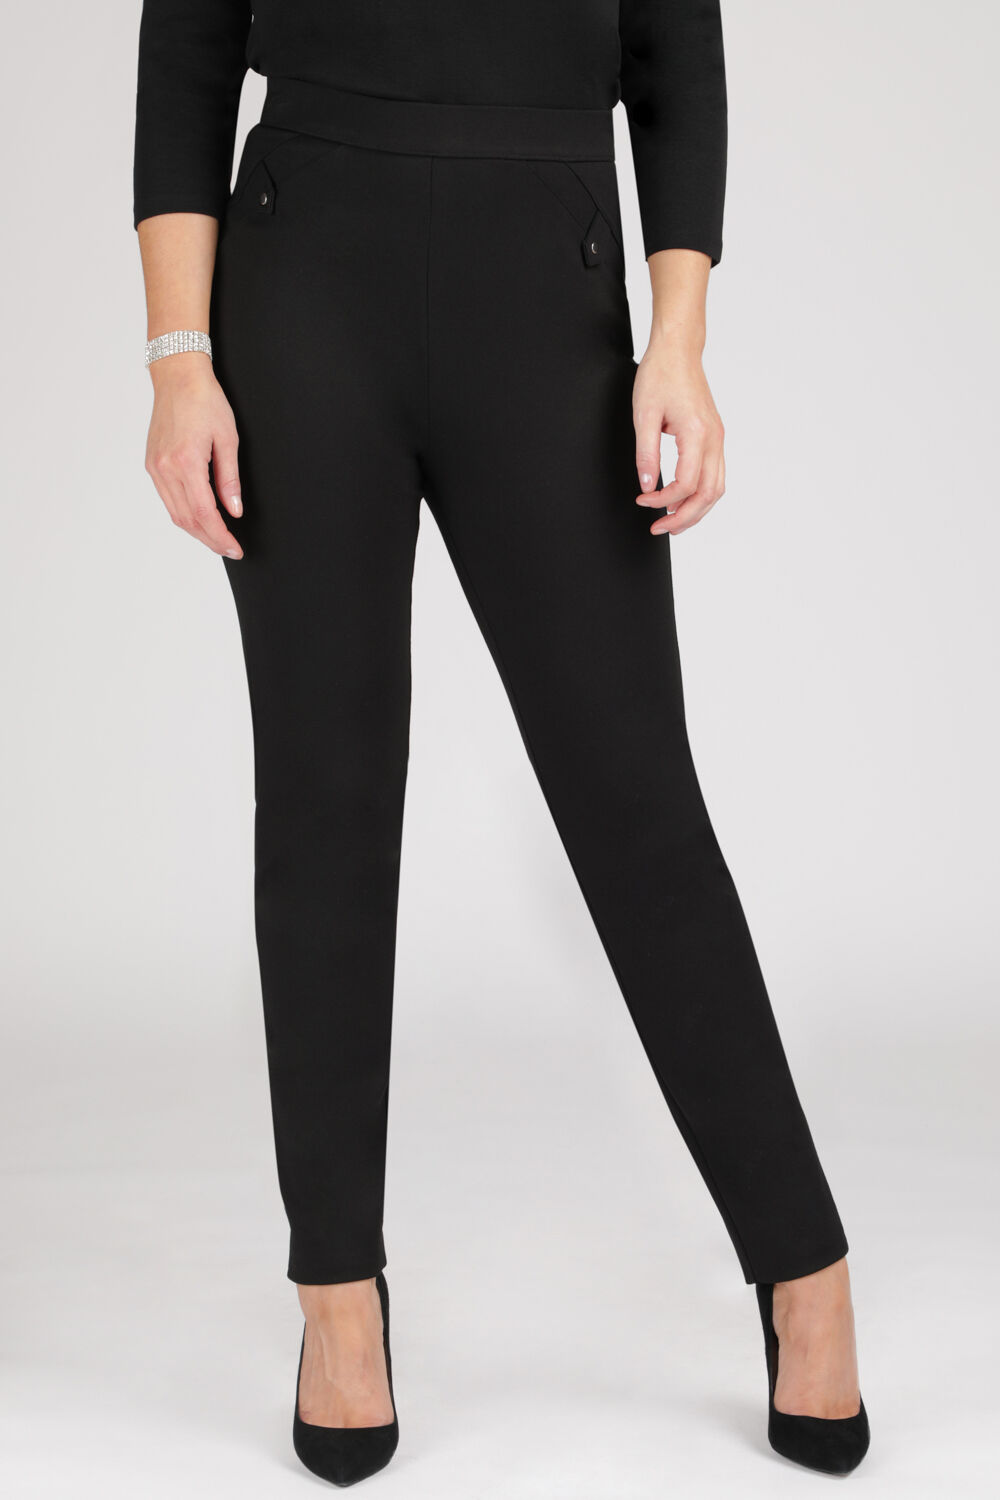 Bonmarche Black Slim Fit Ponte Elasticated Trousers, Size: 26